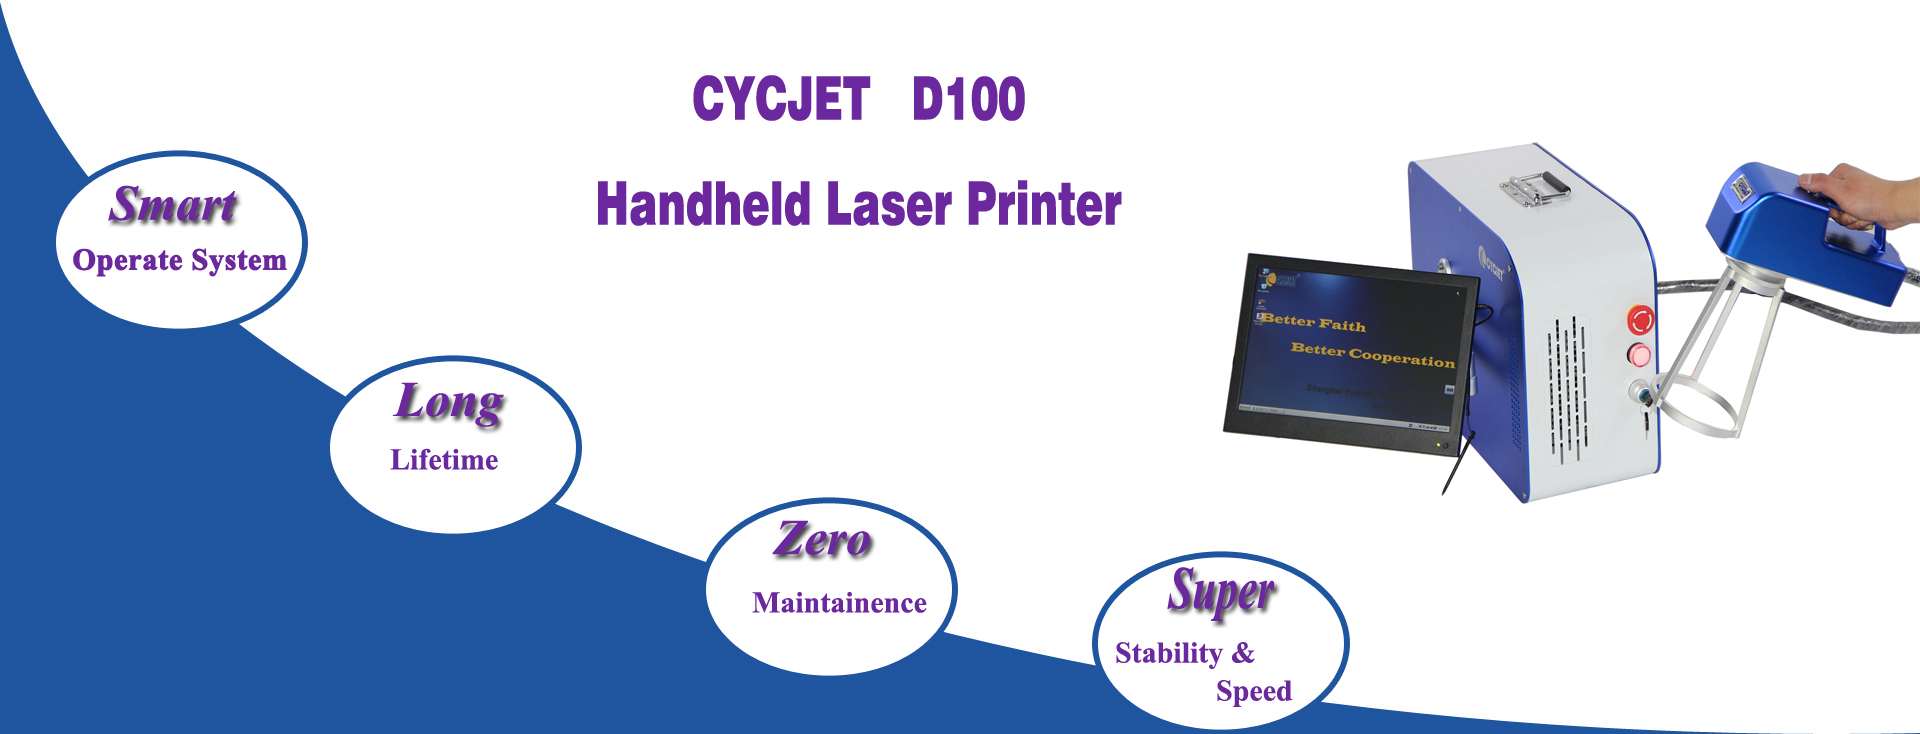 Details of CYCJET D100 Handheld Laser Printer.jpg